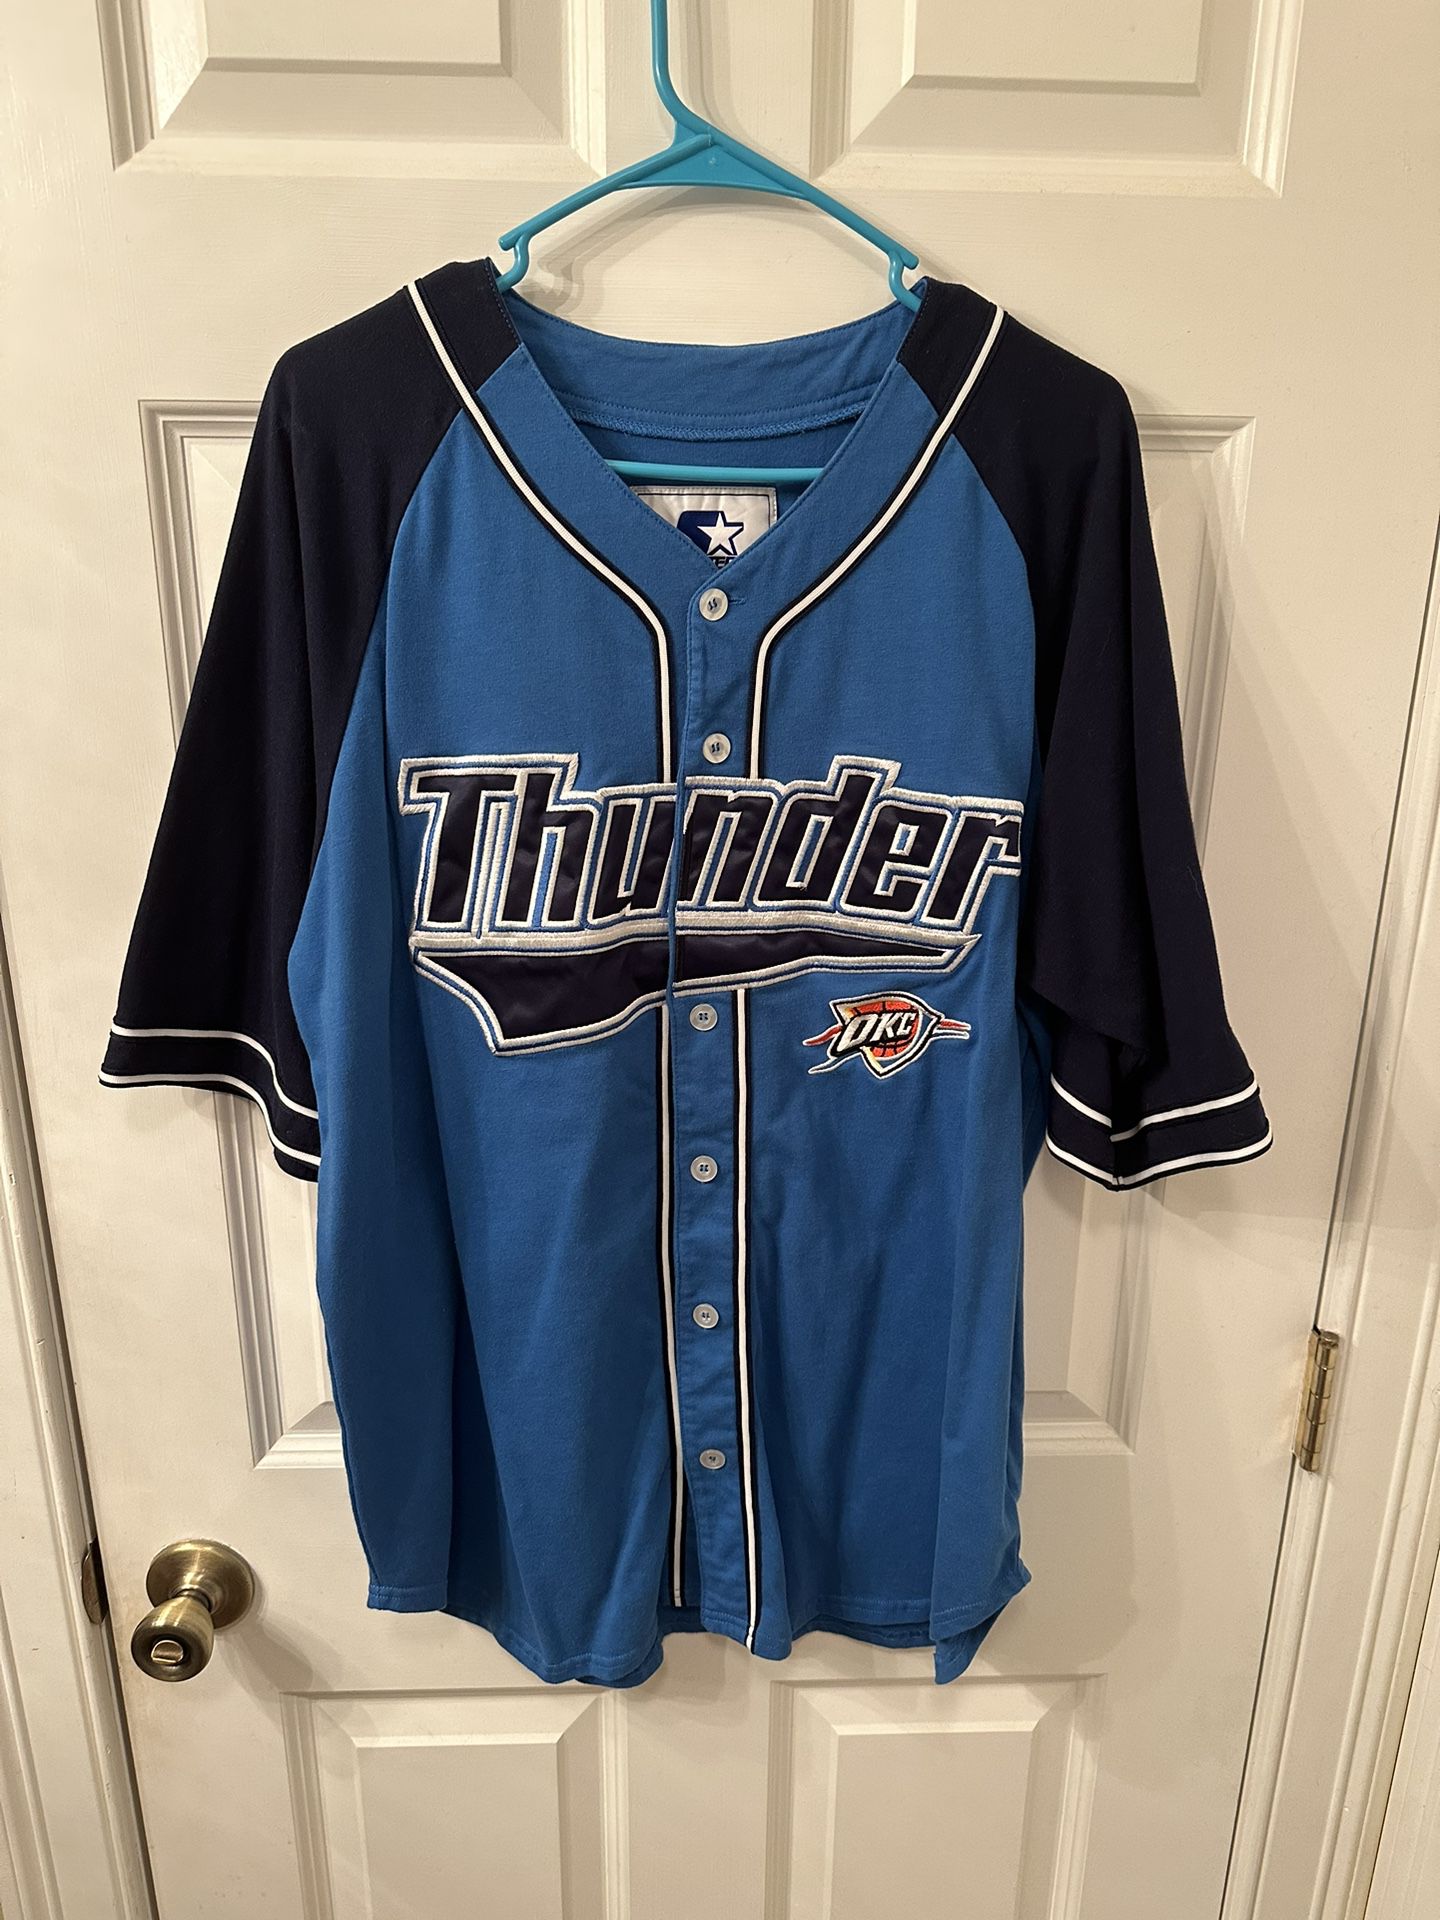 Vintage Starter Thunder Baseball Jersey XL